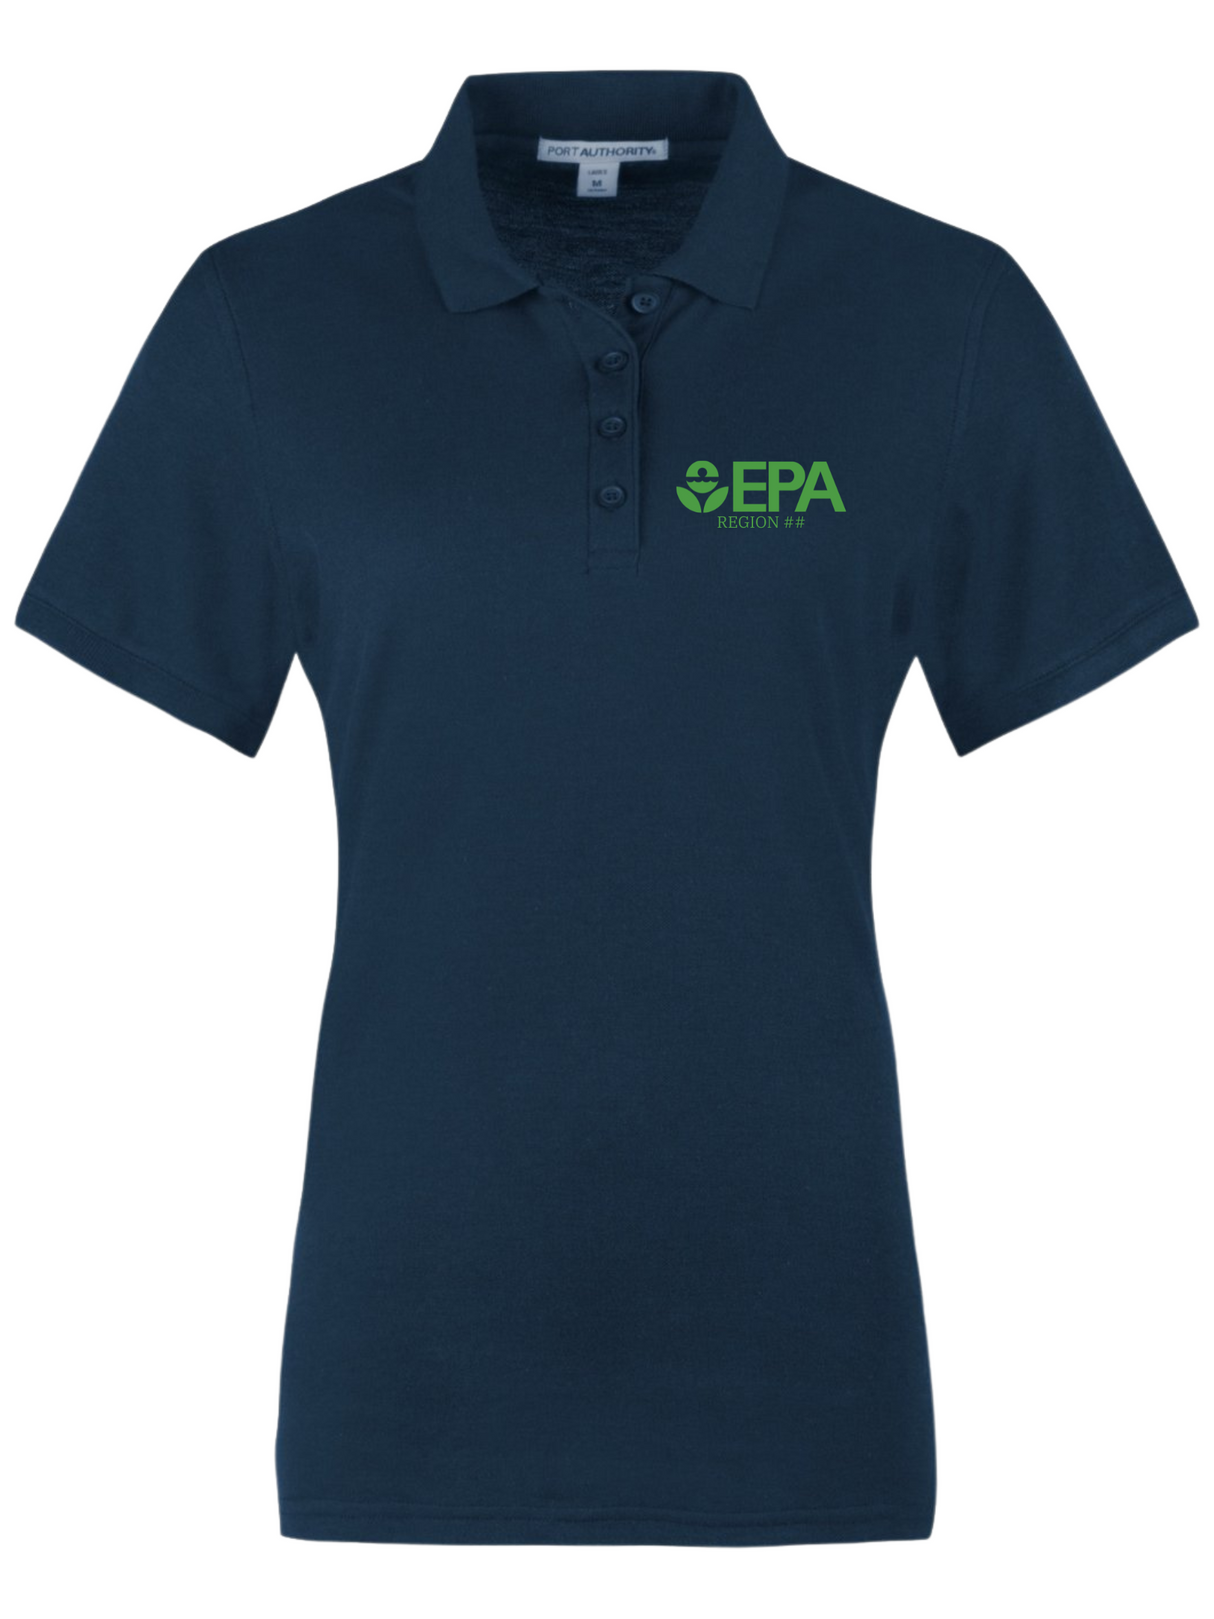 EPA by Region Polo Shirt - Women's Short Sleeve